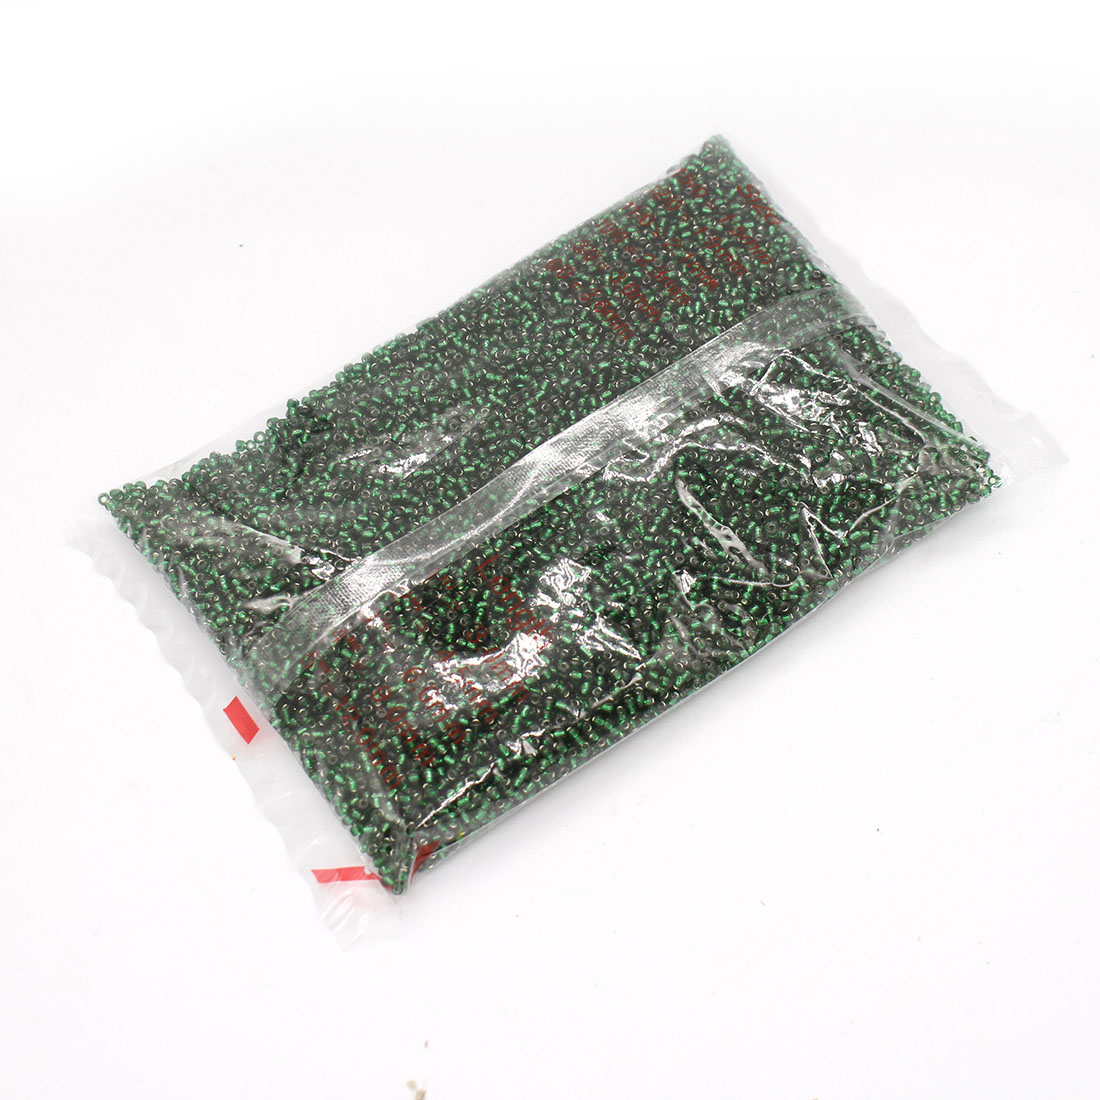 Hole green 3mm 10,000 packs